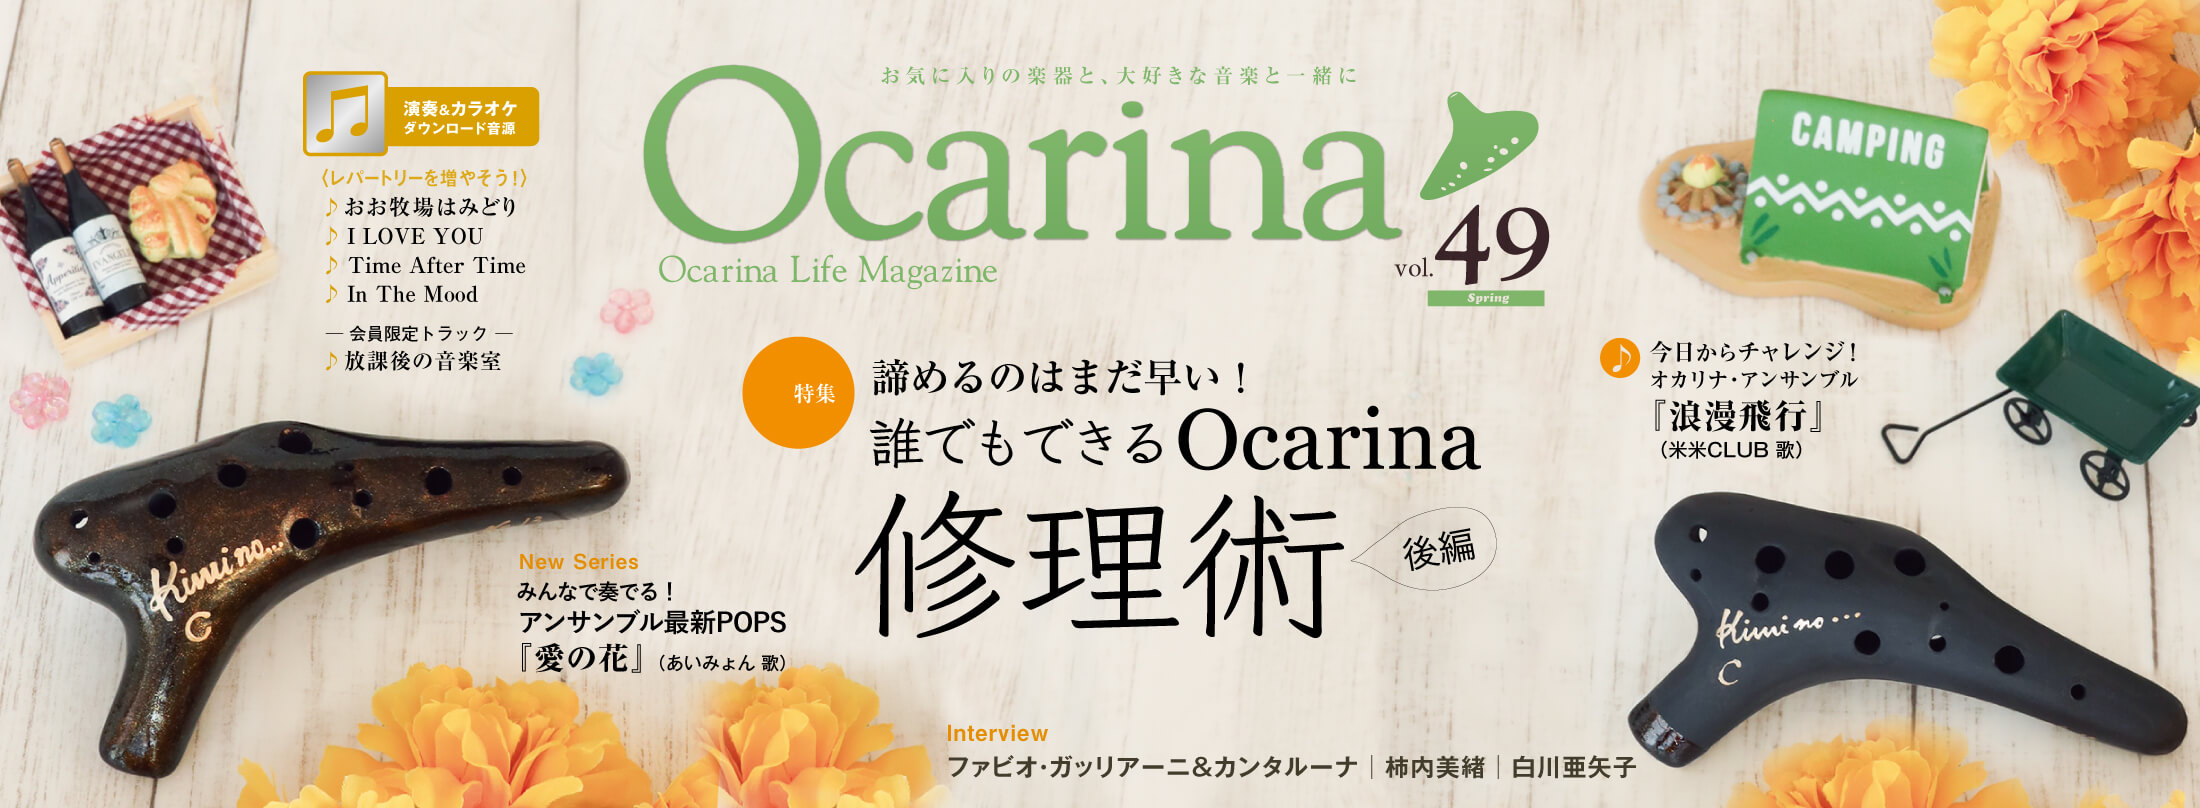 Ocarina 49号